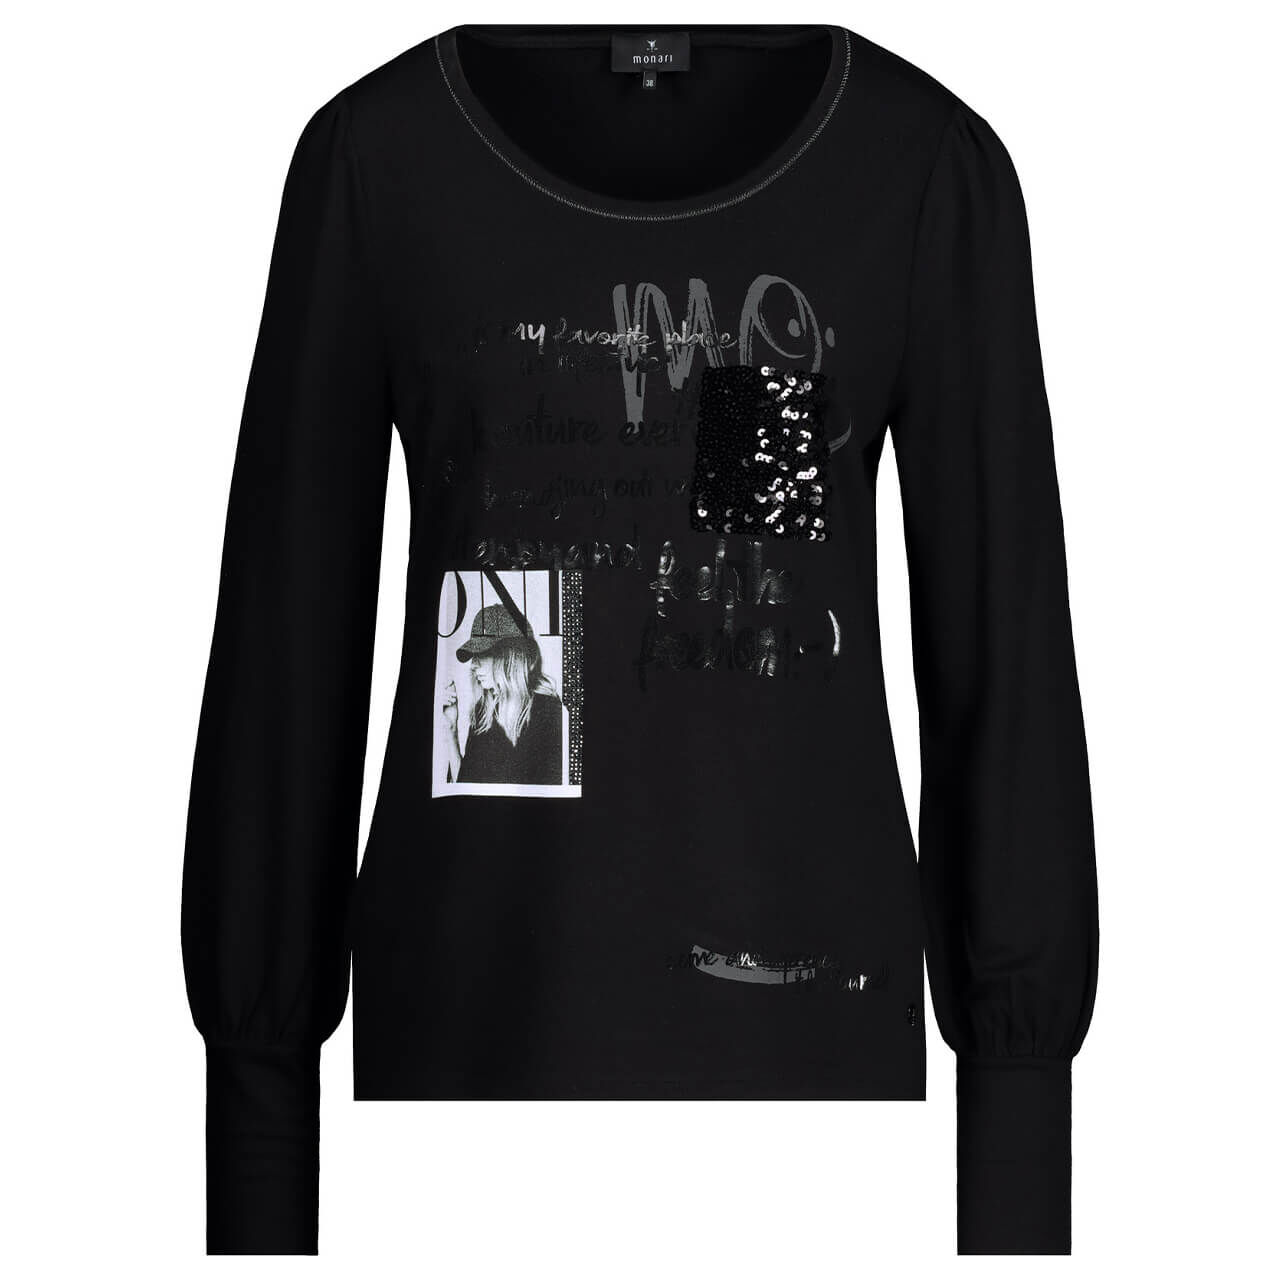 Monari Damen Langarm Shirt black glitter couture